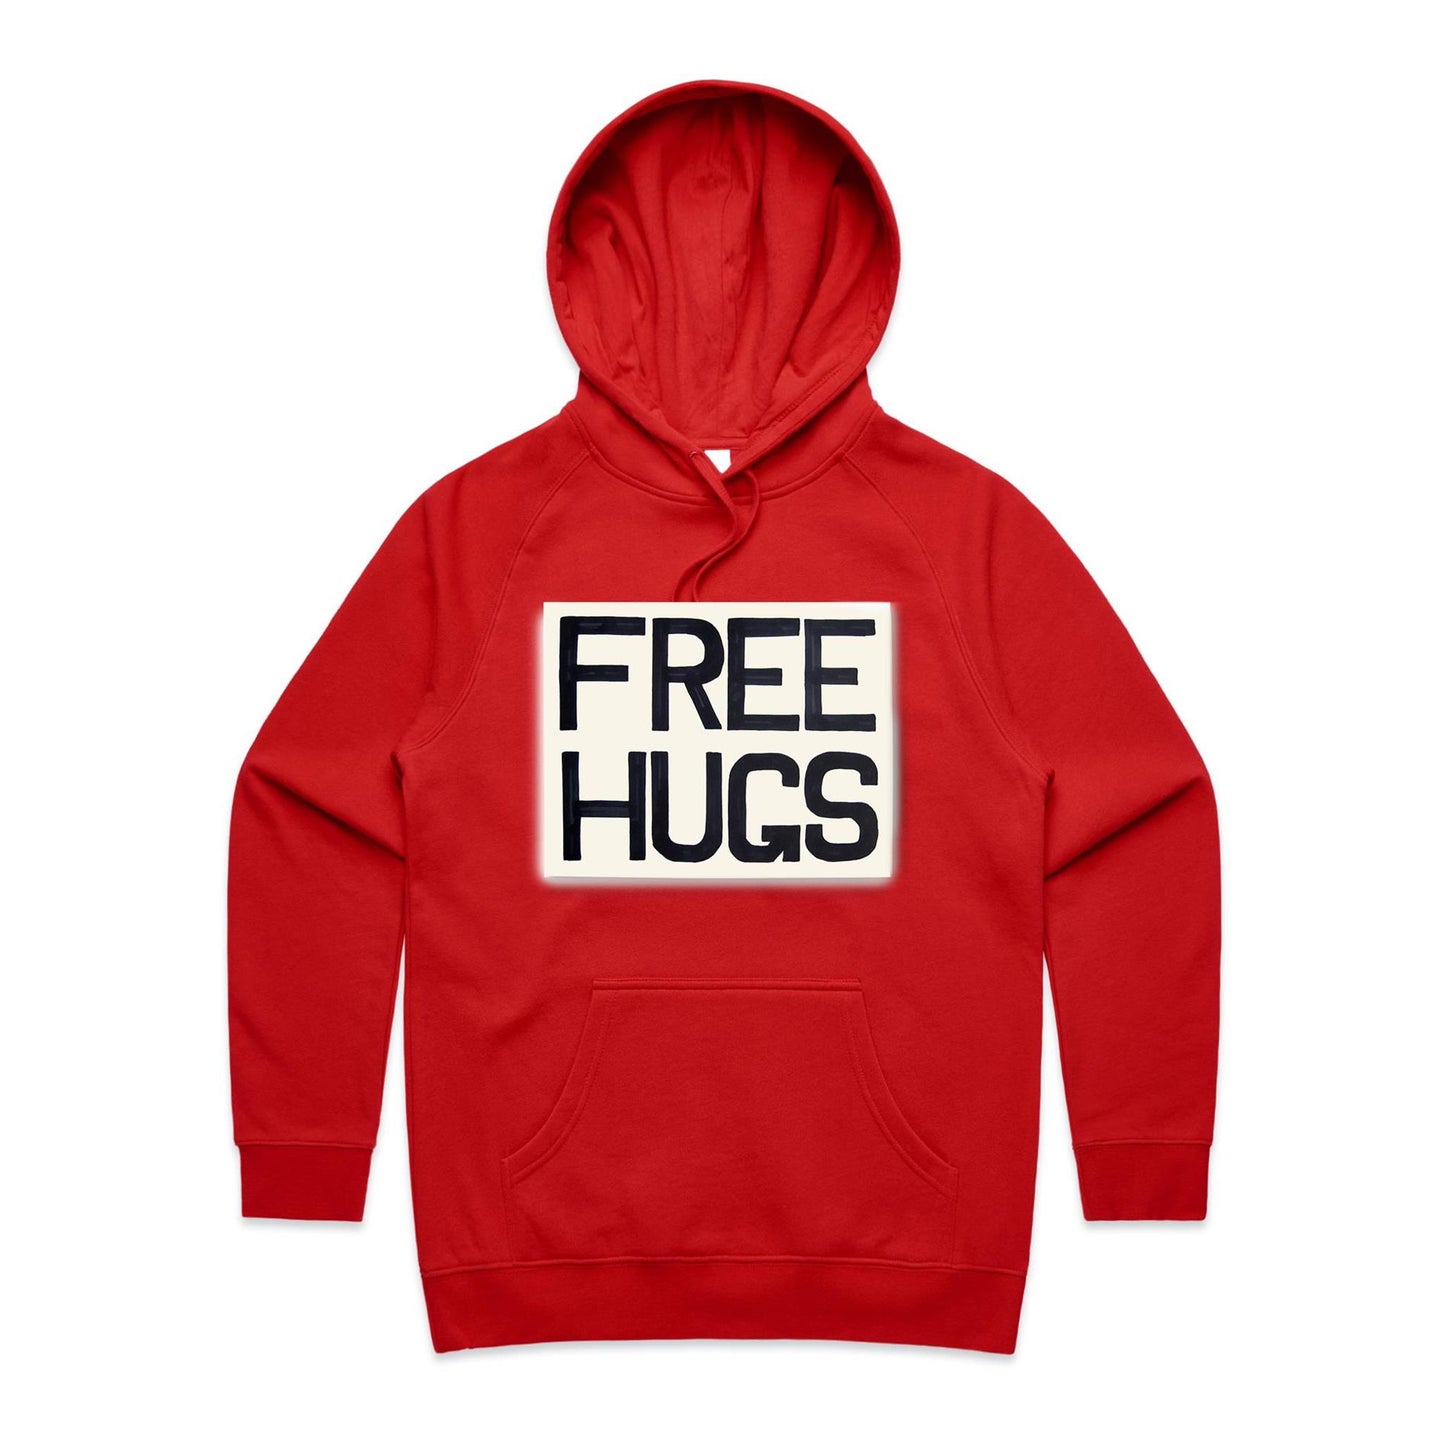 Free Hugs Hoodies for Women